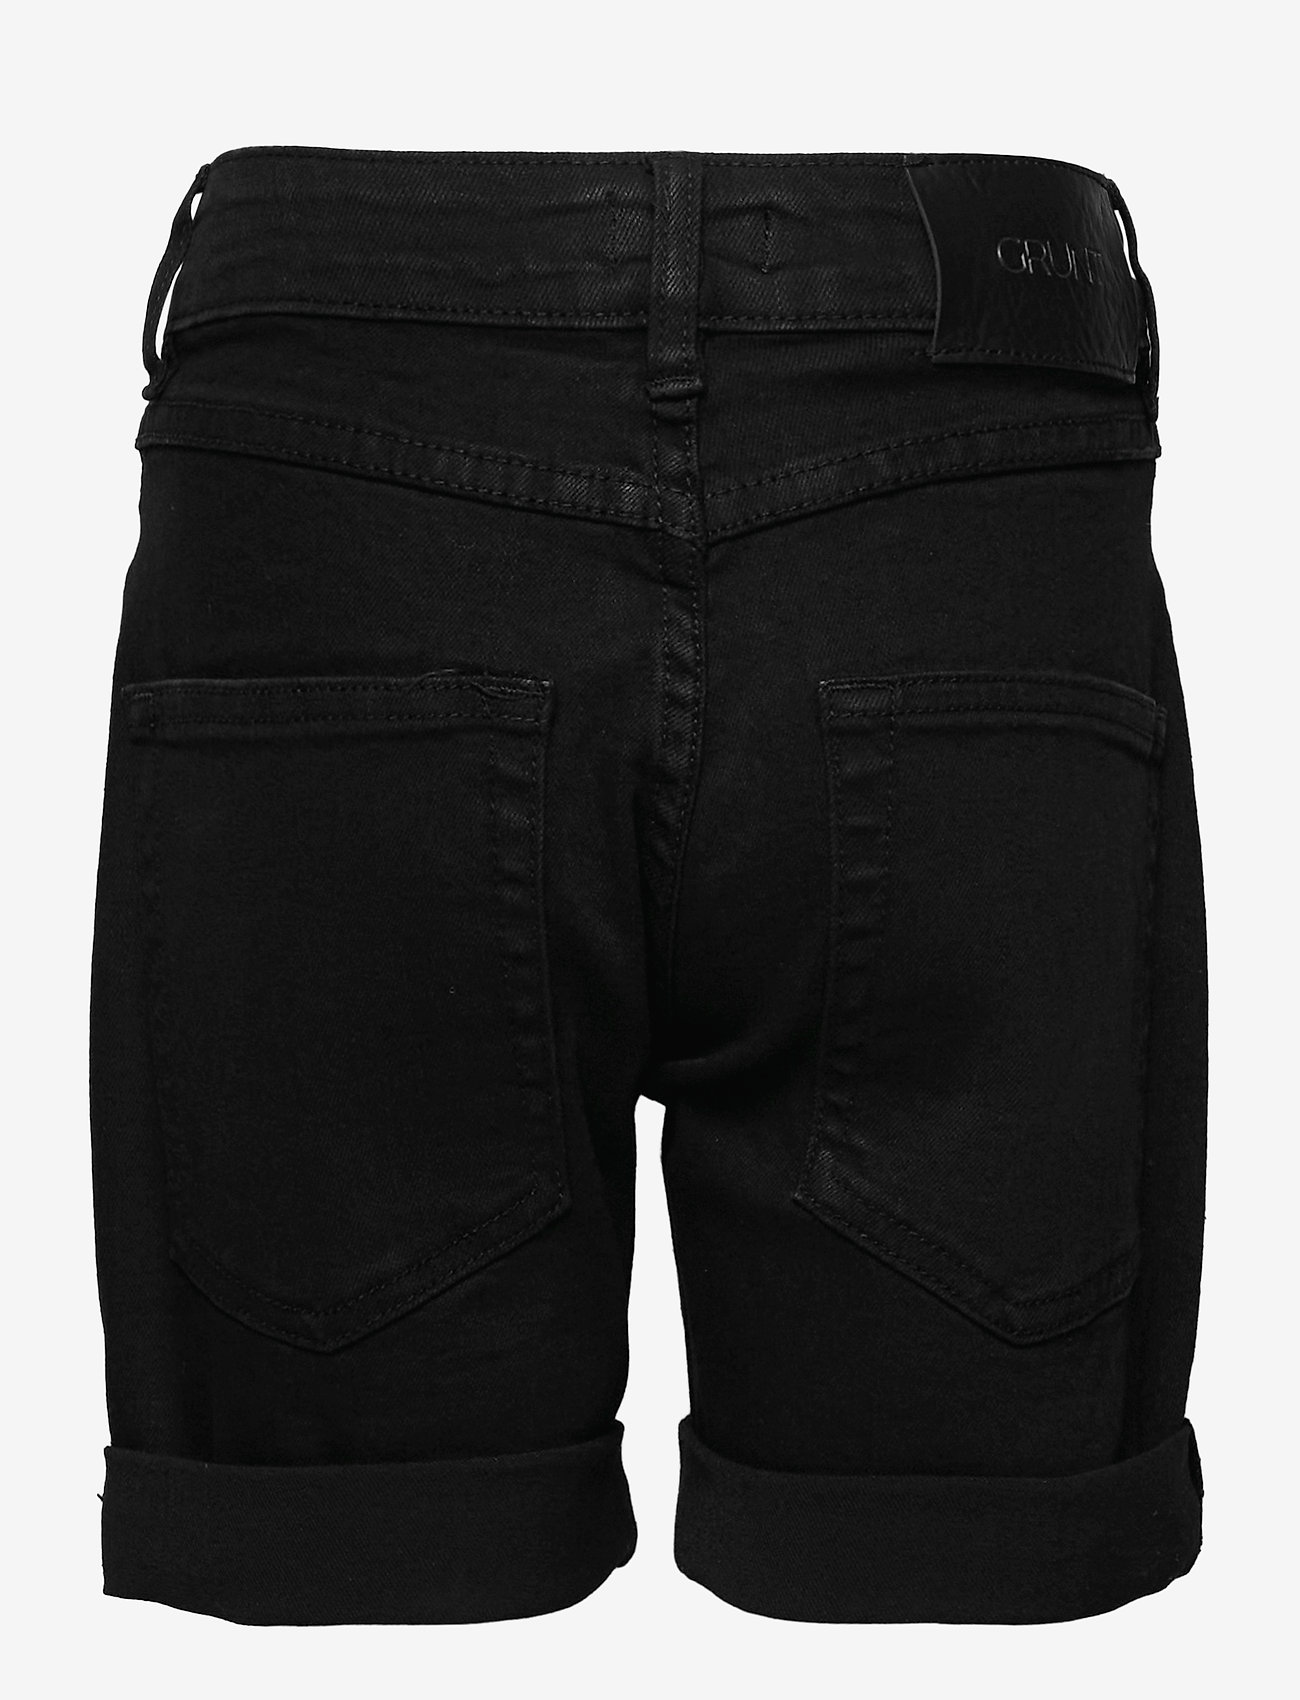 Grunt - Stay Black Shorts - korte jeansbroeken - black - 1